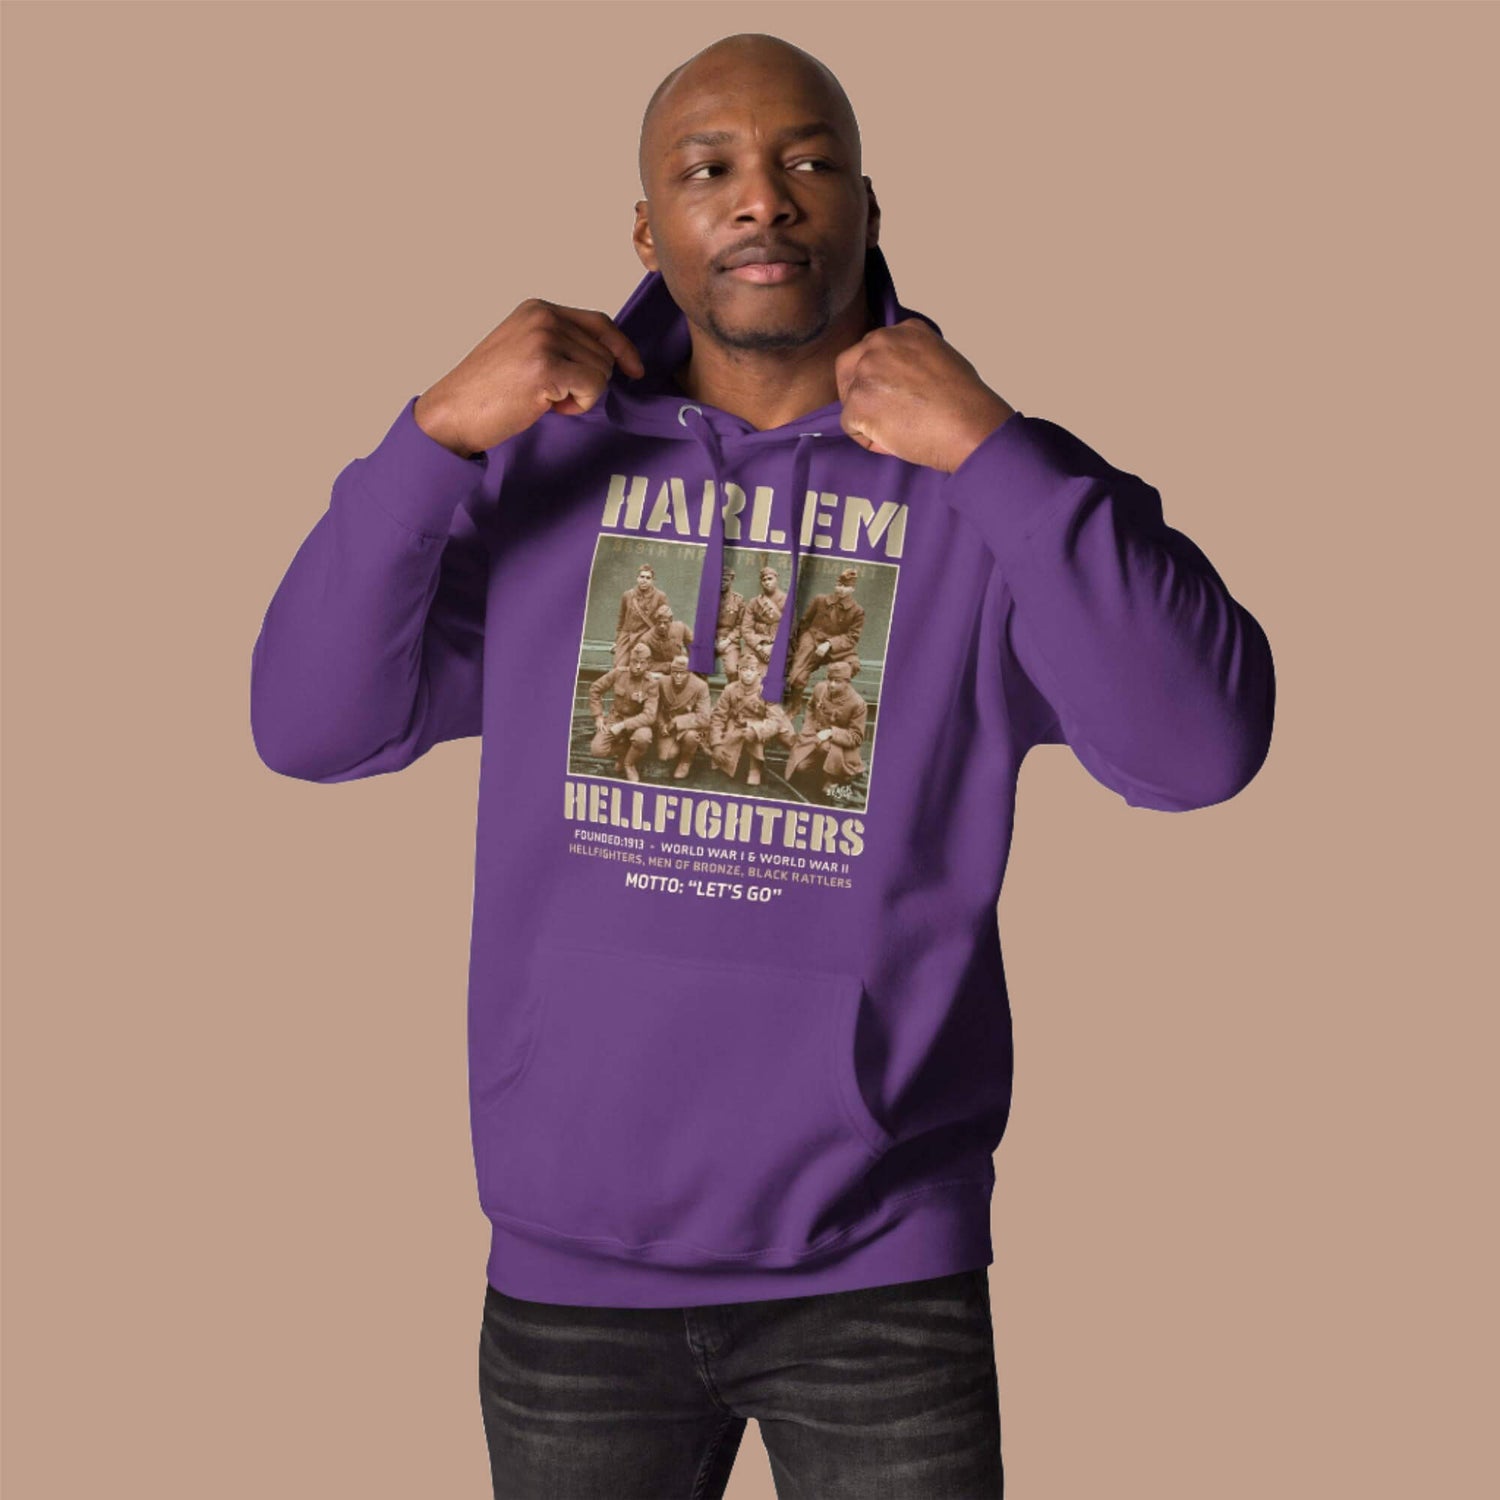 harlem hellfighter hoodie worn by a bald older Black man